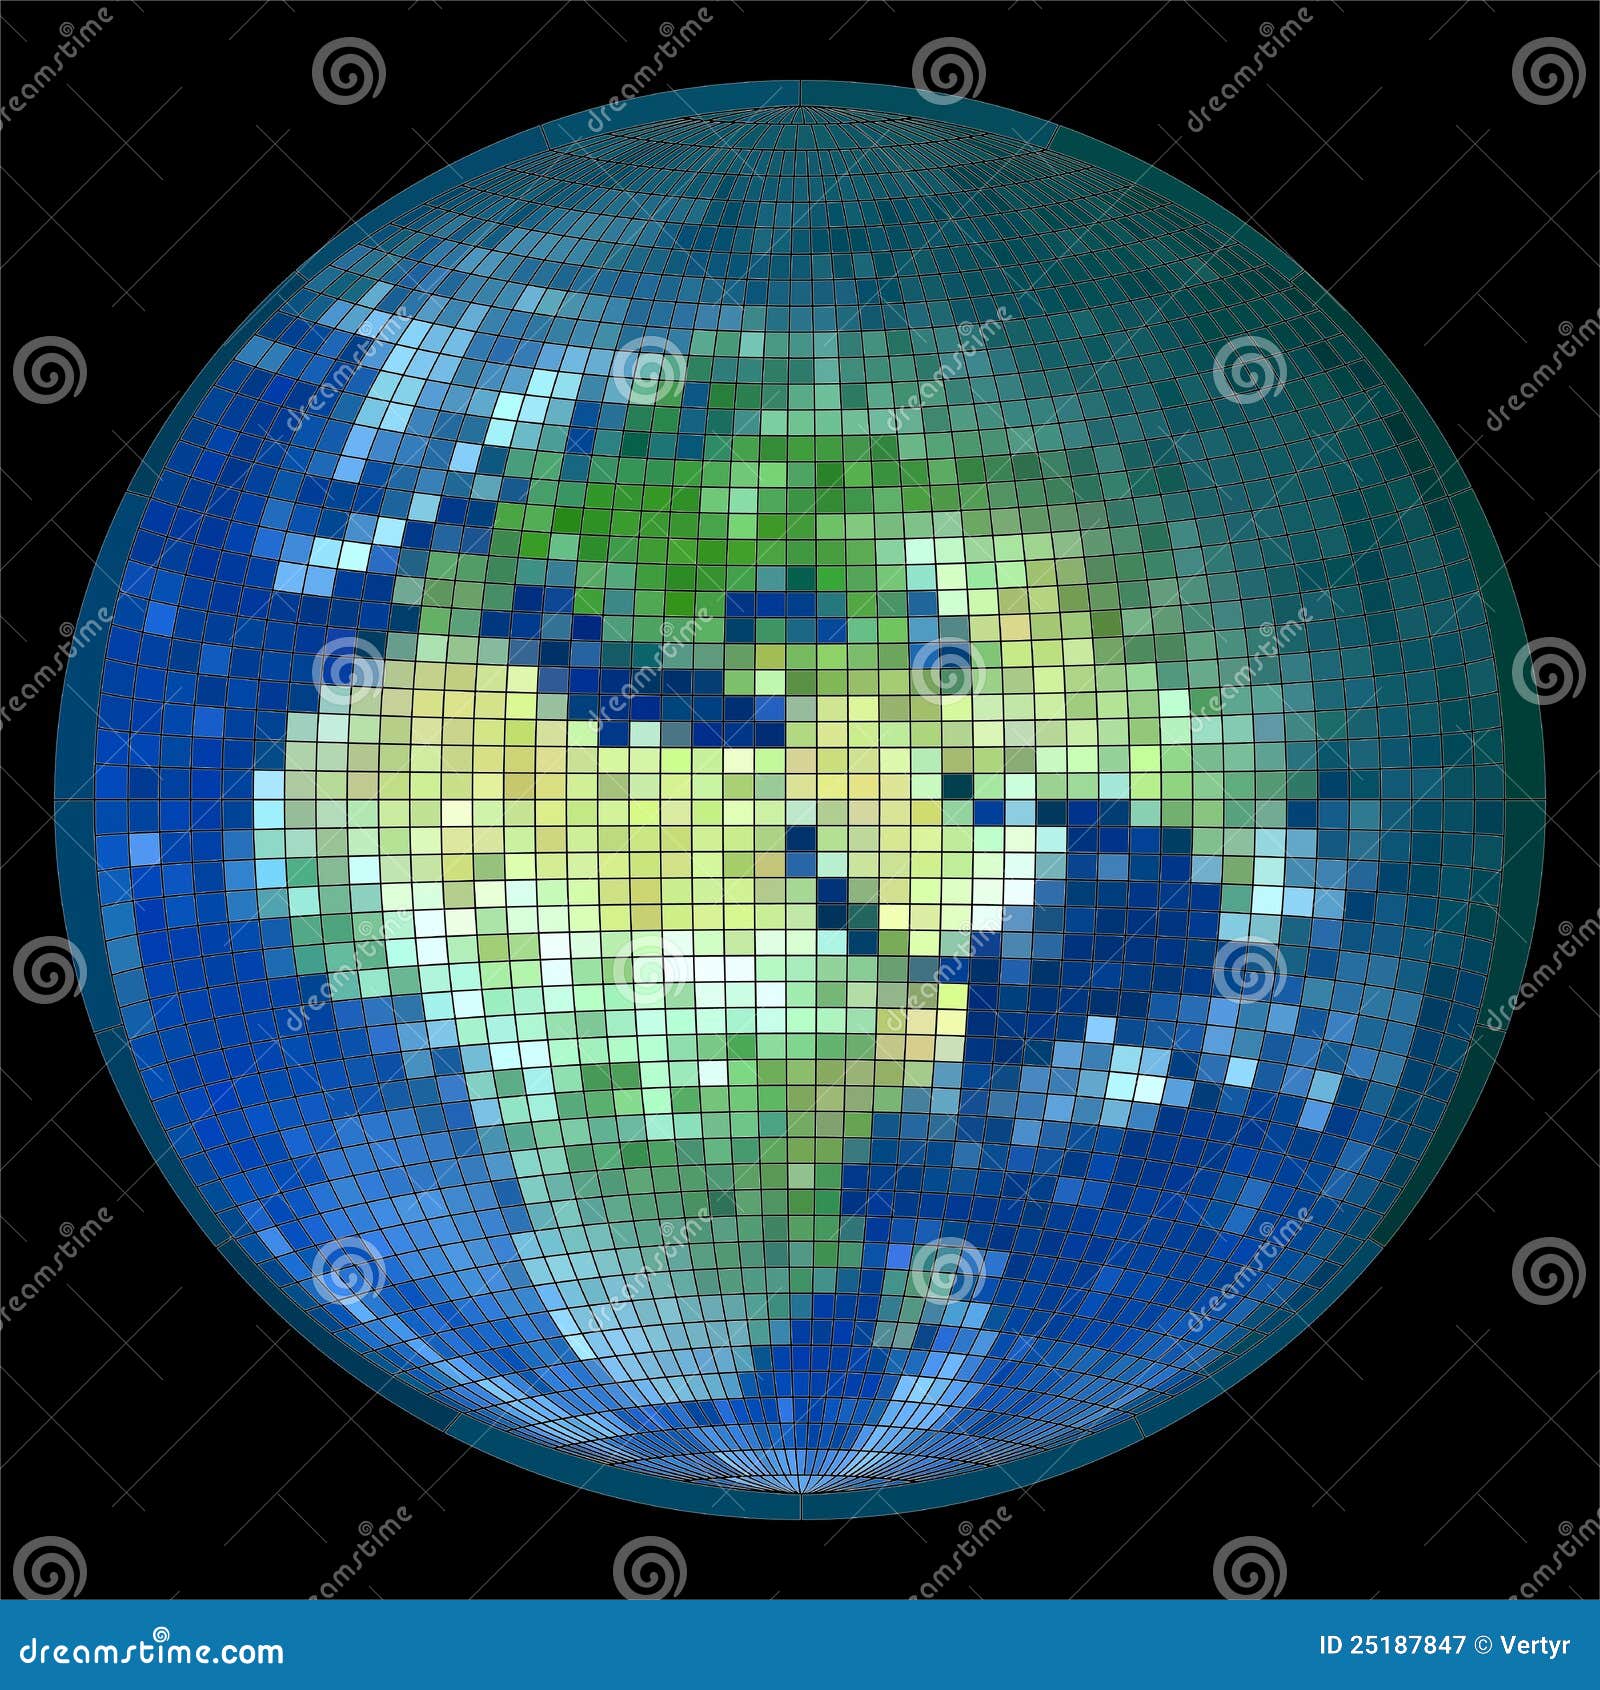 vector clipart planet earth - photo #35